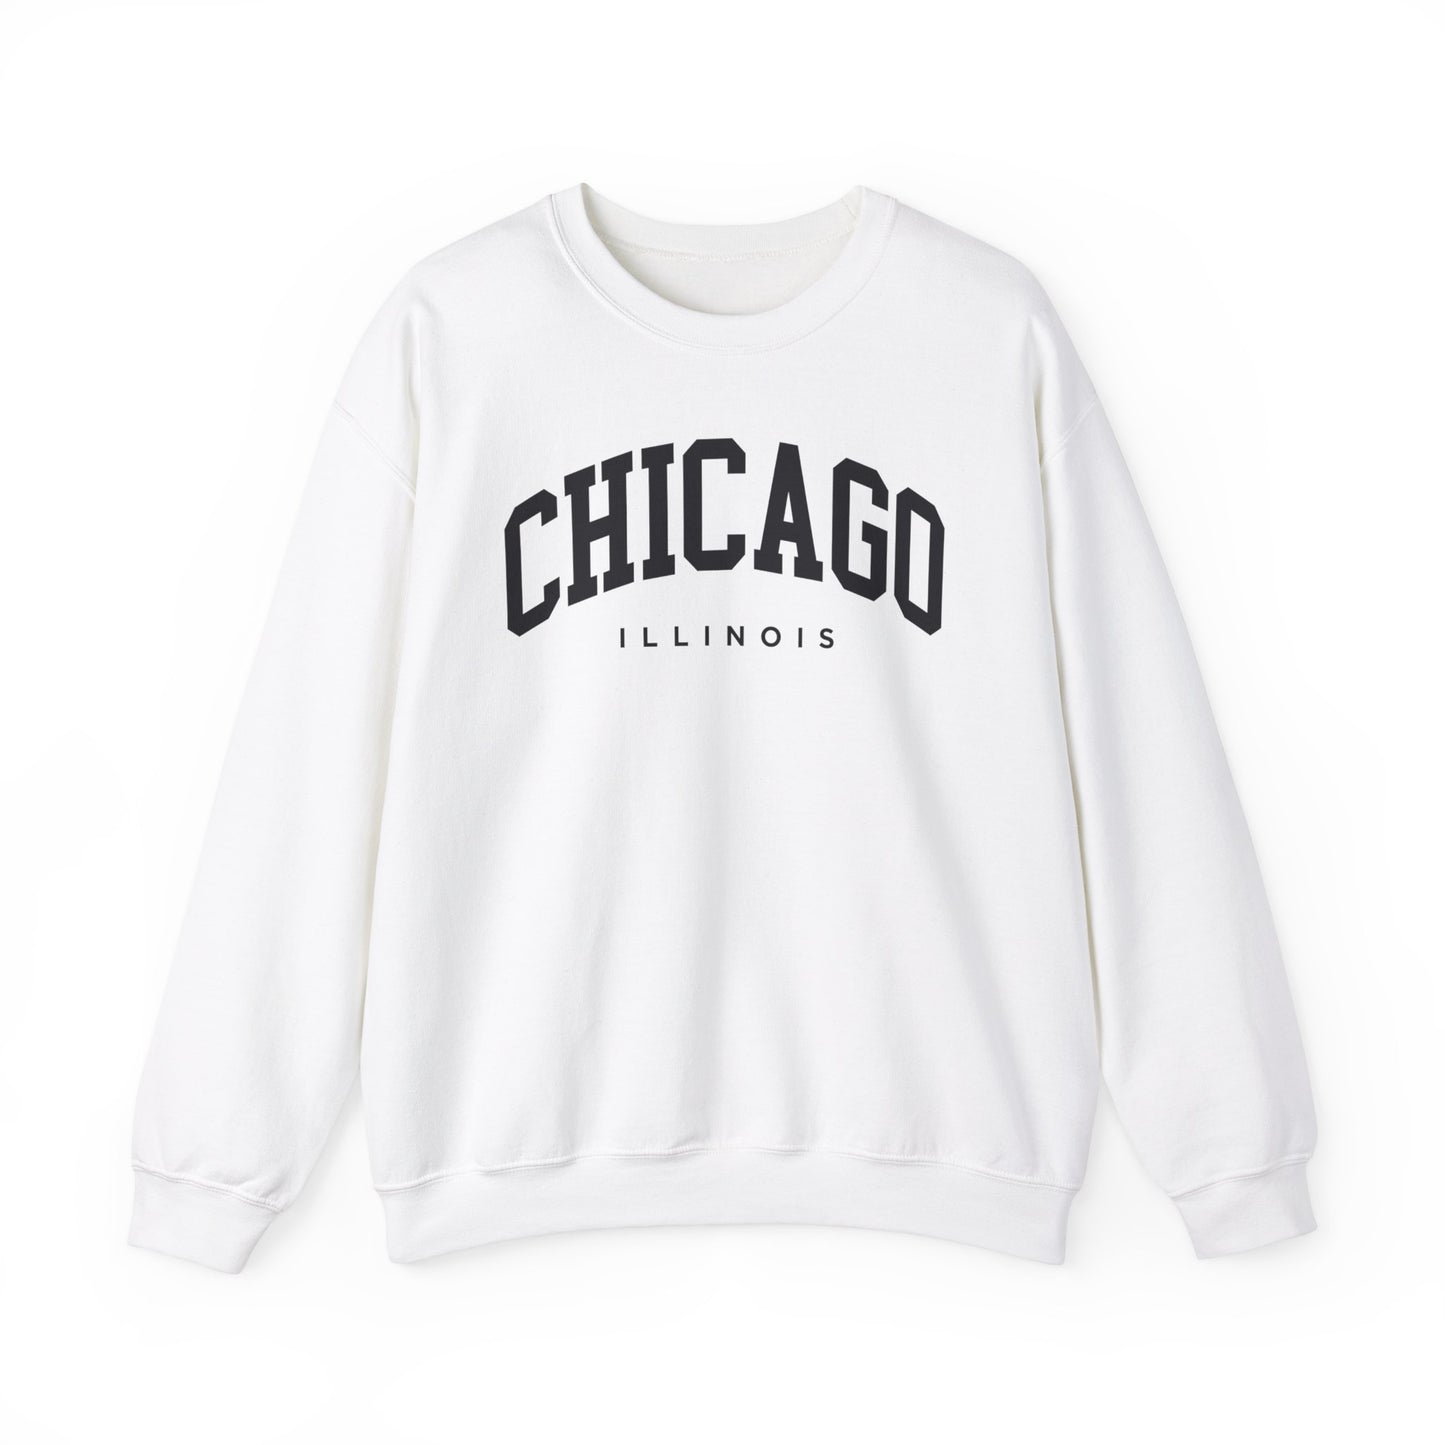 Chicago Illinois Sweatshirt